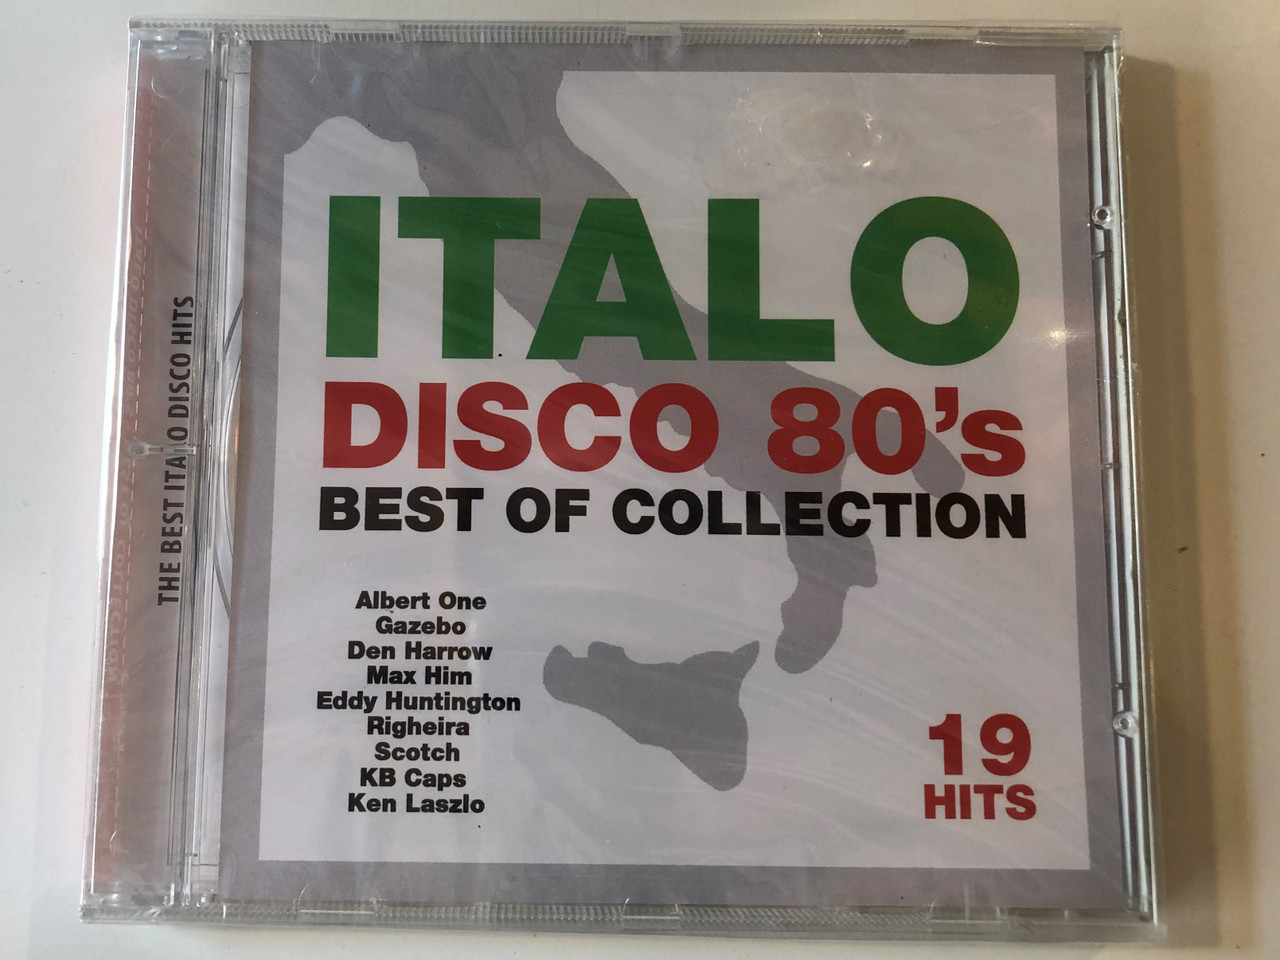 Italo Disco 80's (Best Of Collection) / Albert One, Gazebo, Den Harrow, Max  Him, Eddy Huntington, Righeira, Scotch, KB Caps, Ken Laszlo / 19 Hits /  Frontline Productions & Records ‎Audio CD / FL044 - bibleinmylanguage